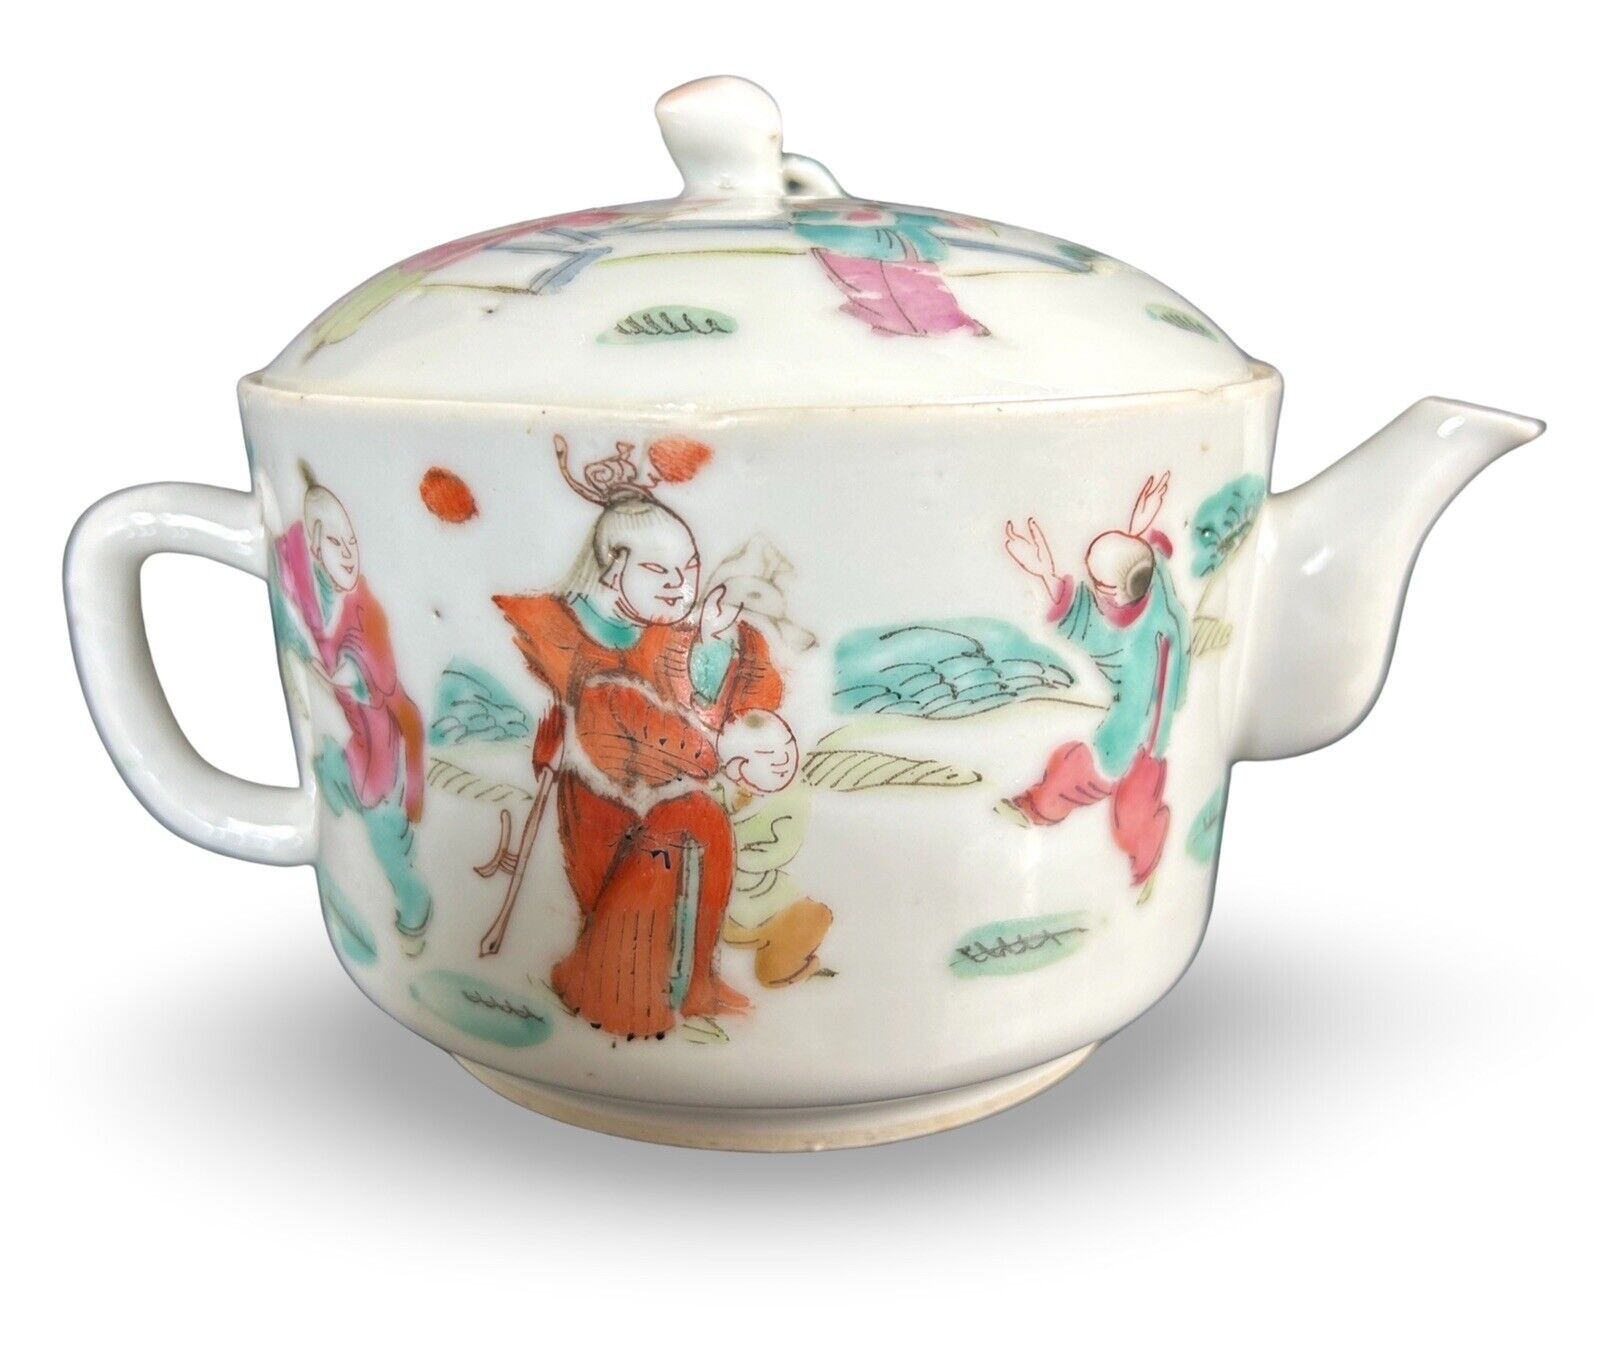 Chinese Export Tongzhi Era Teapot Porcelain/People 6.25”L Late Qing 19thC